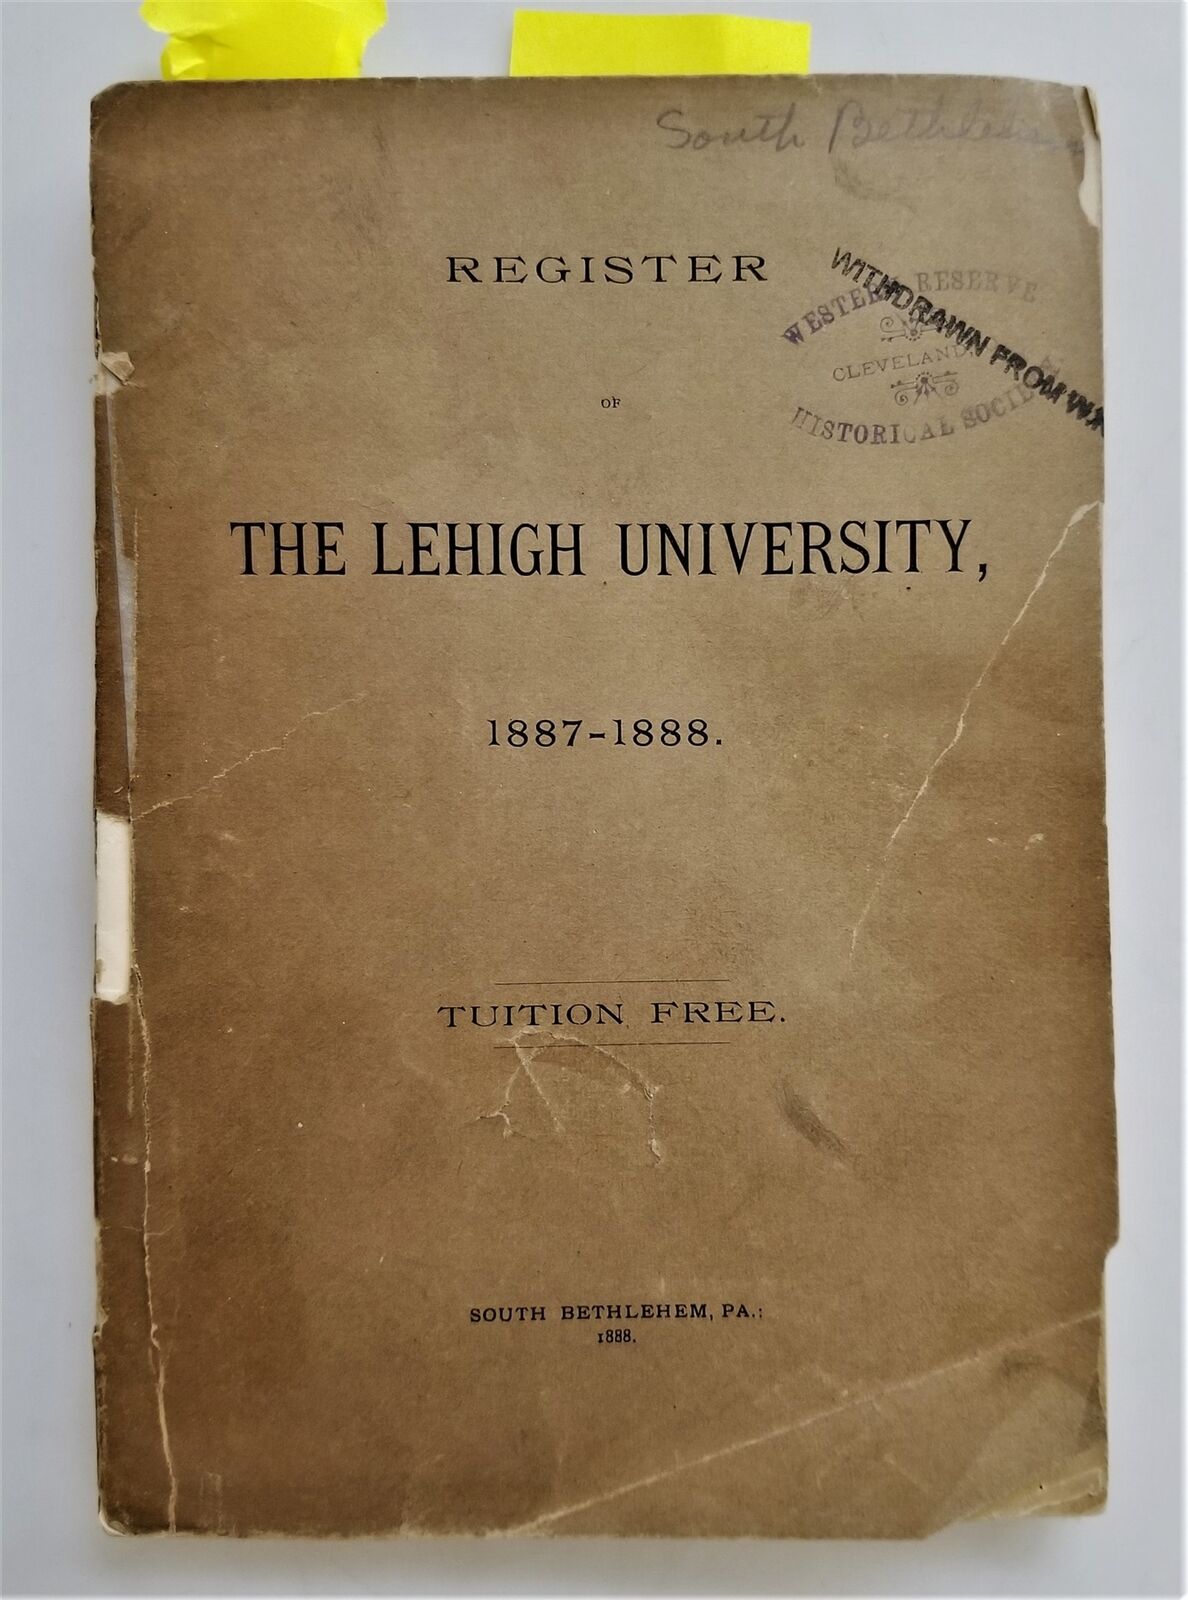 1896 antique LEHIGH UNIVERSITY REGISTER bethehem pa CATALOG students courses